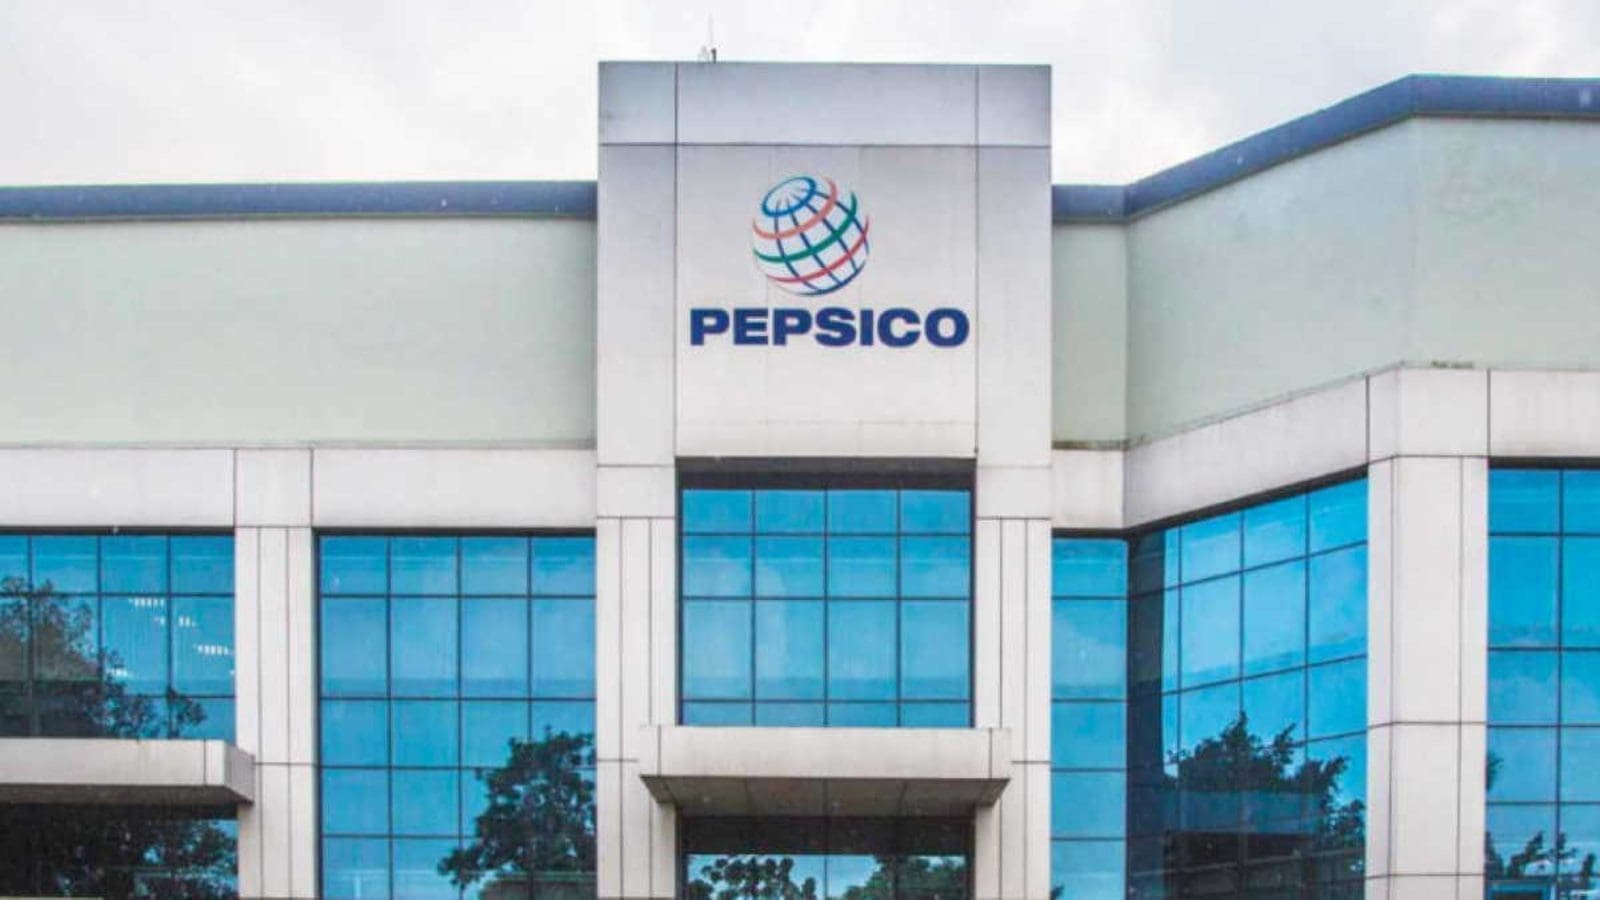 PepsiCo posts 9% increase in Q3 revenue despite volume decline in some units